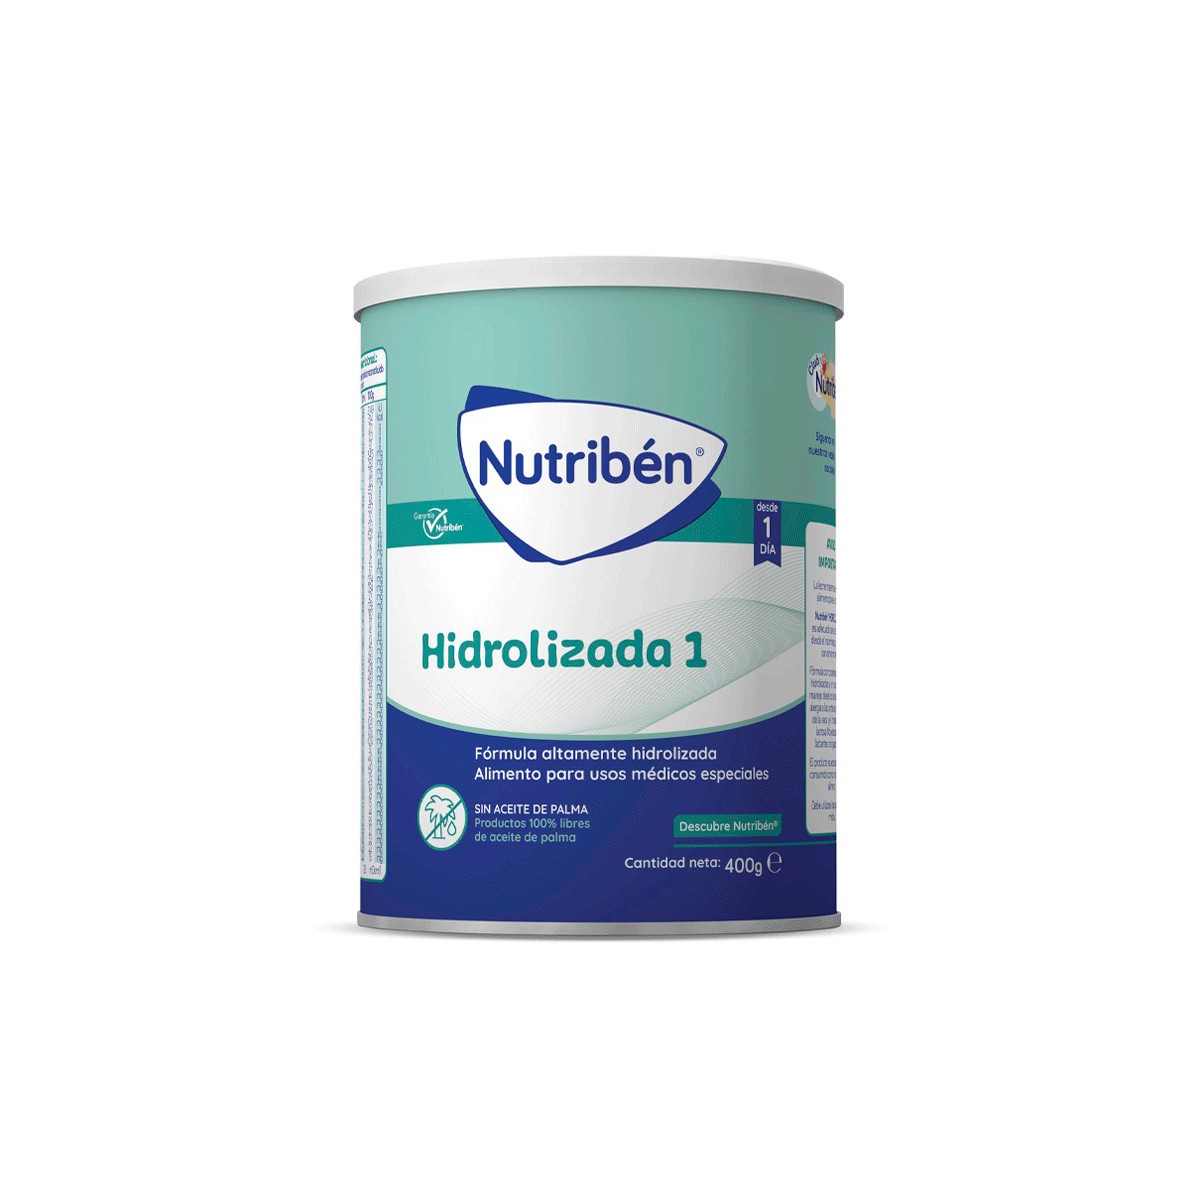 Nutriben Hidrolizada 1 400 g